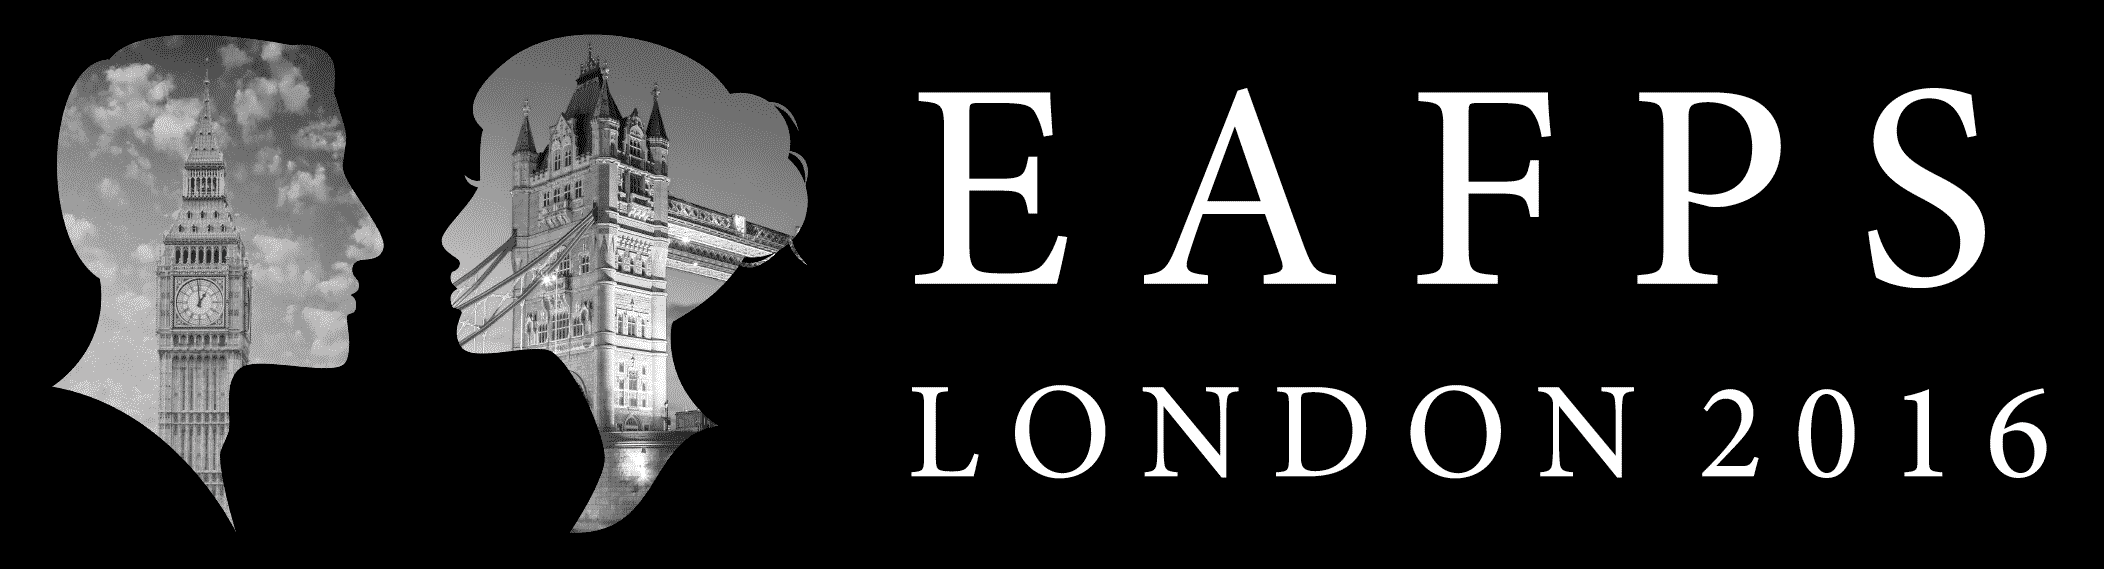 EAFPS London 2016